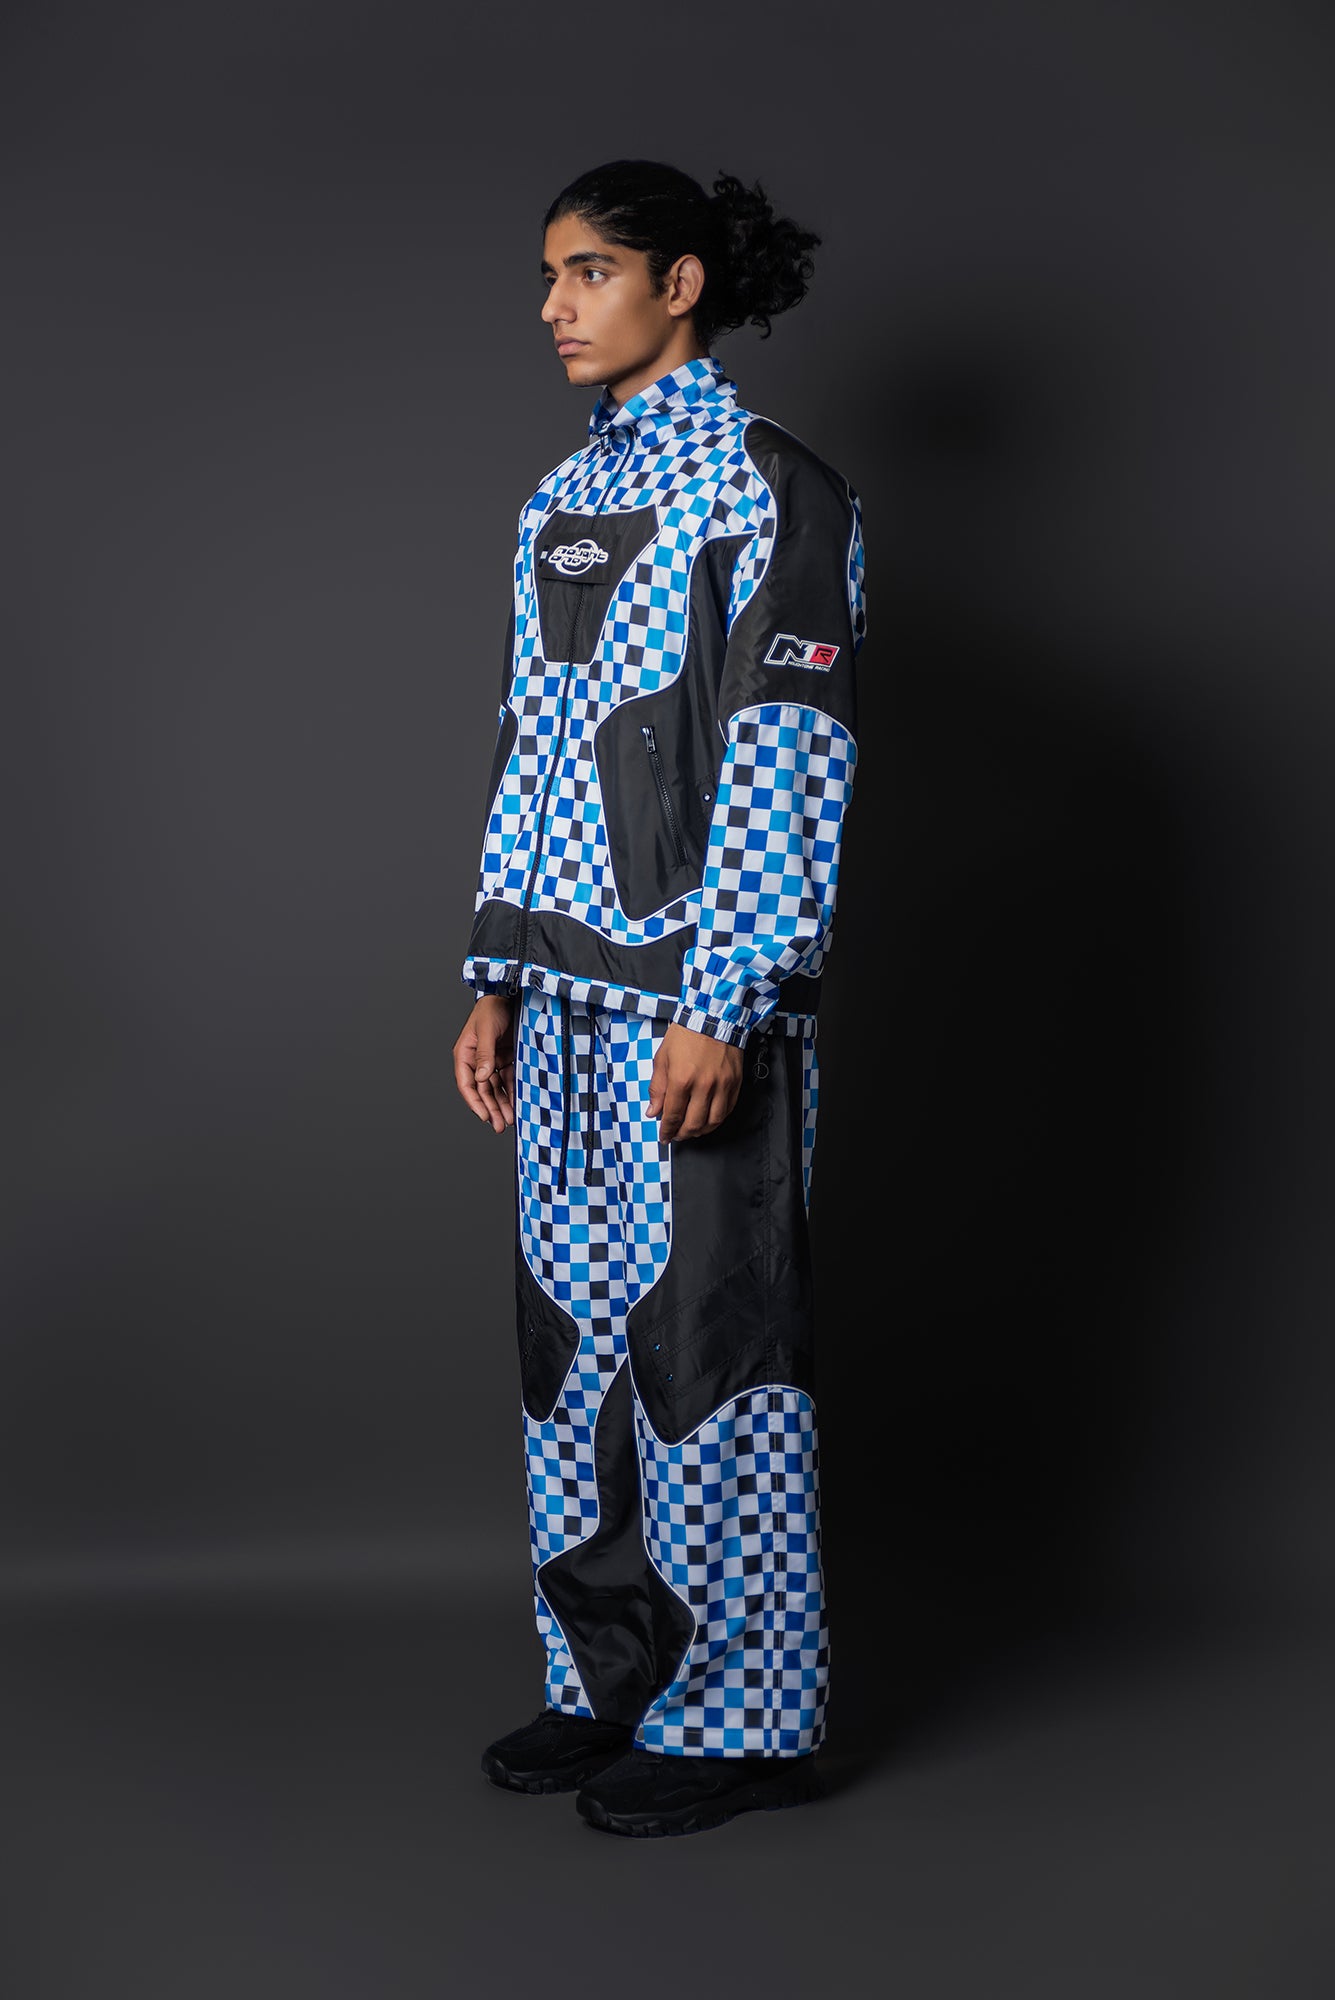 Moto GP Flagoff Track Jacket